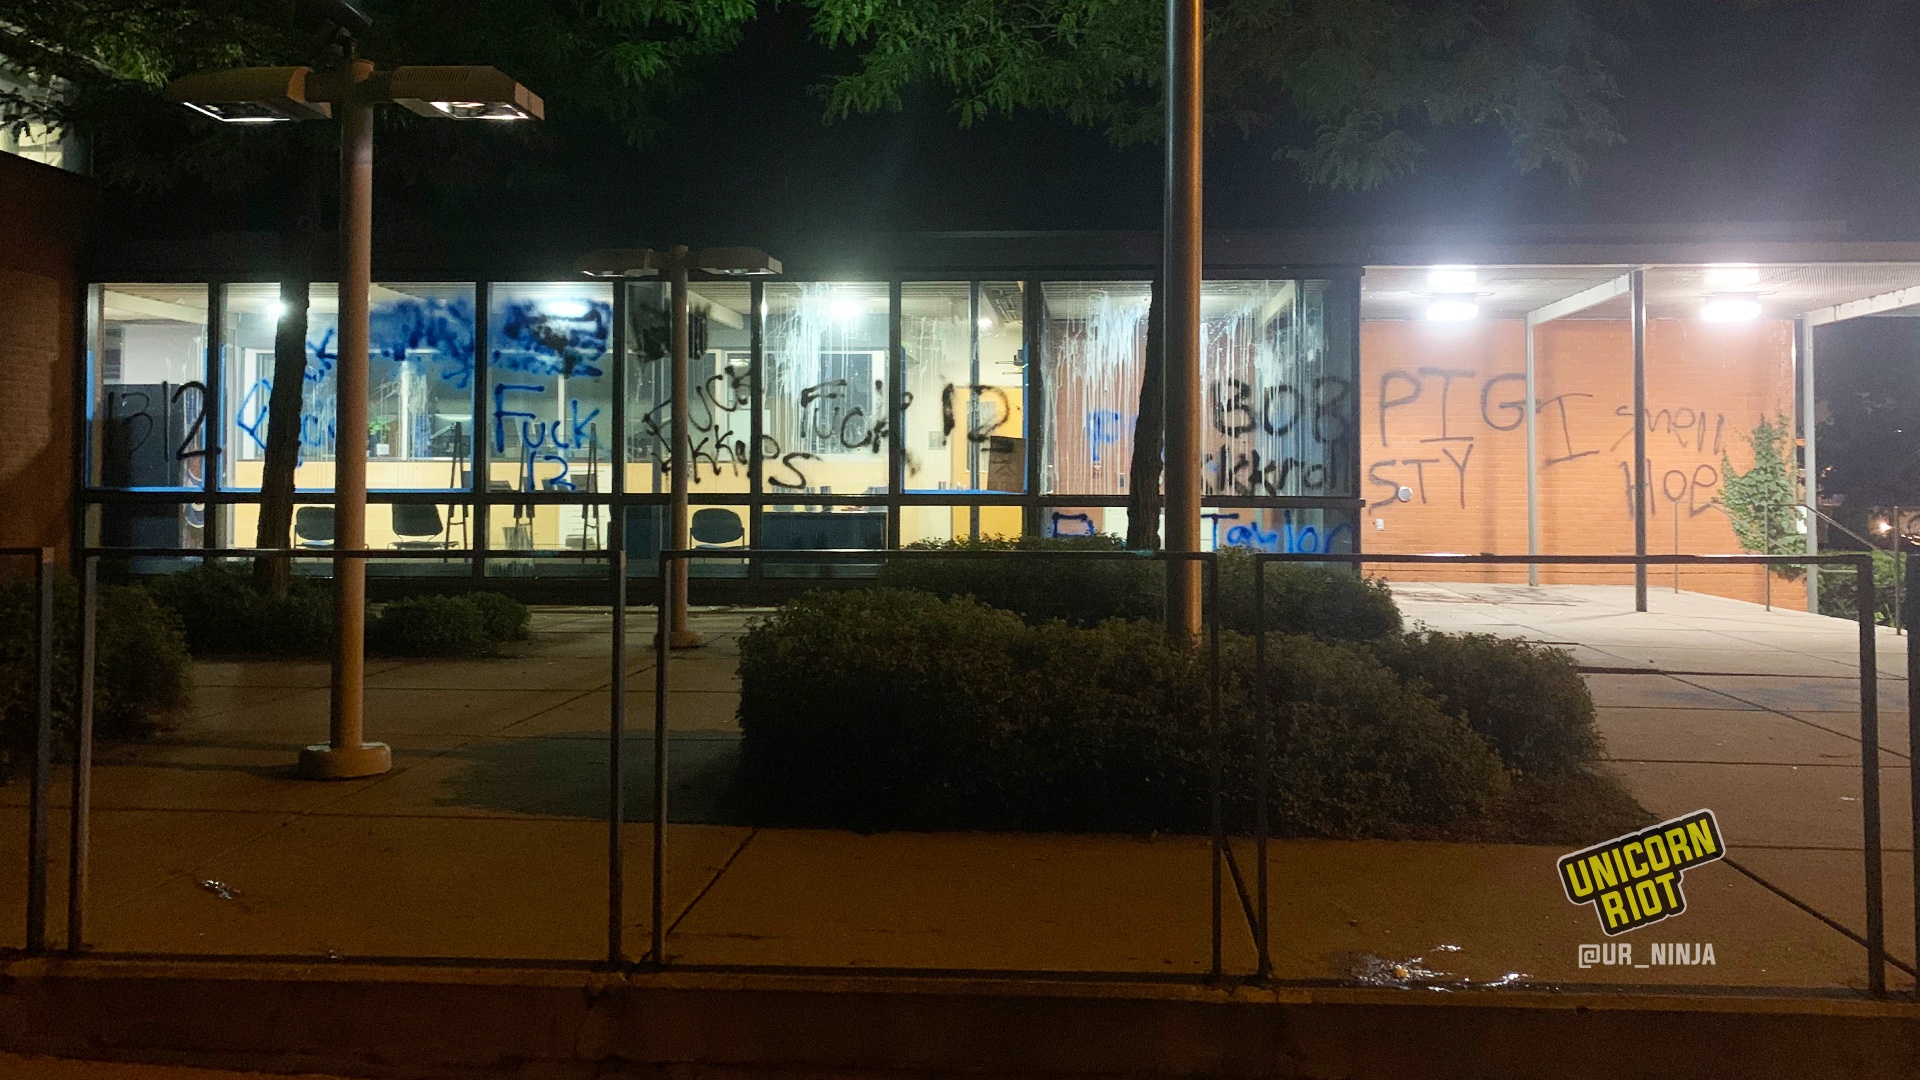 Graffiti on the windows and walls of the 5th Precinct